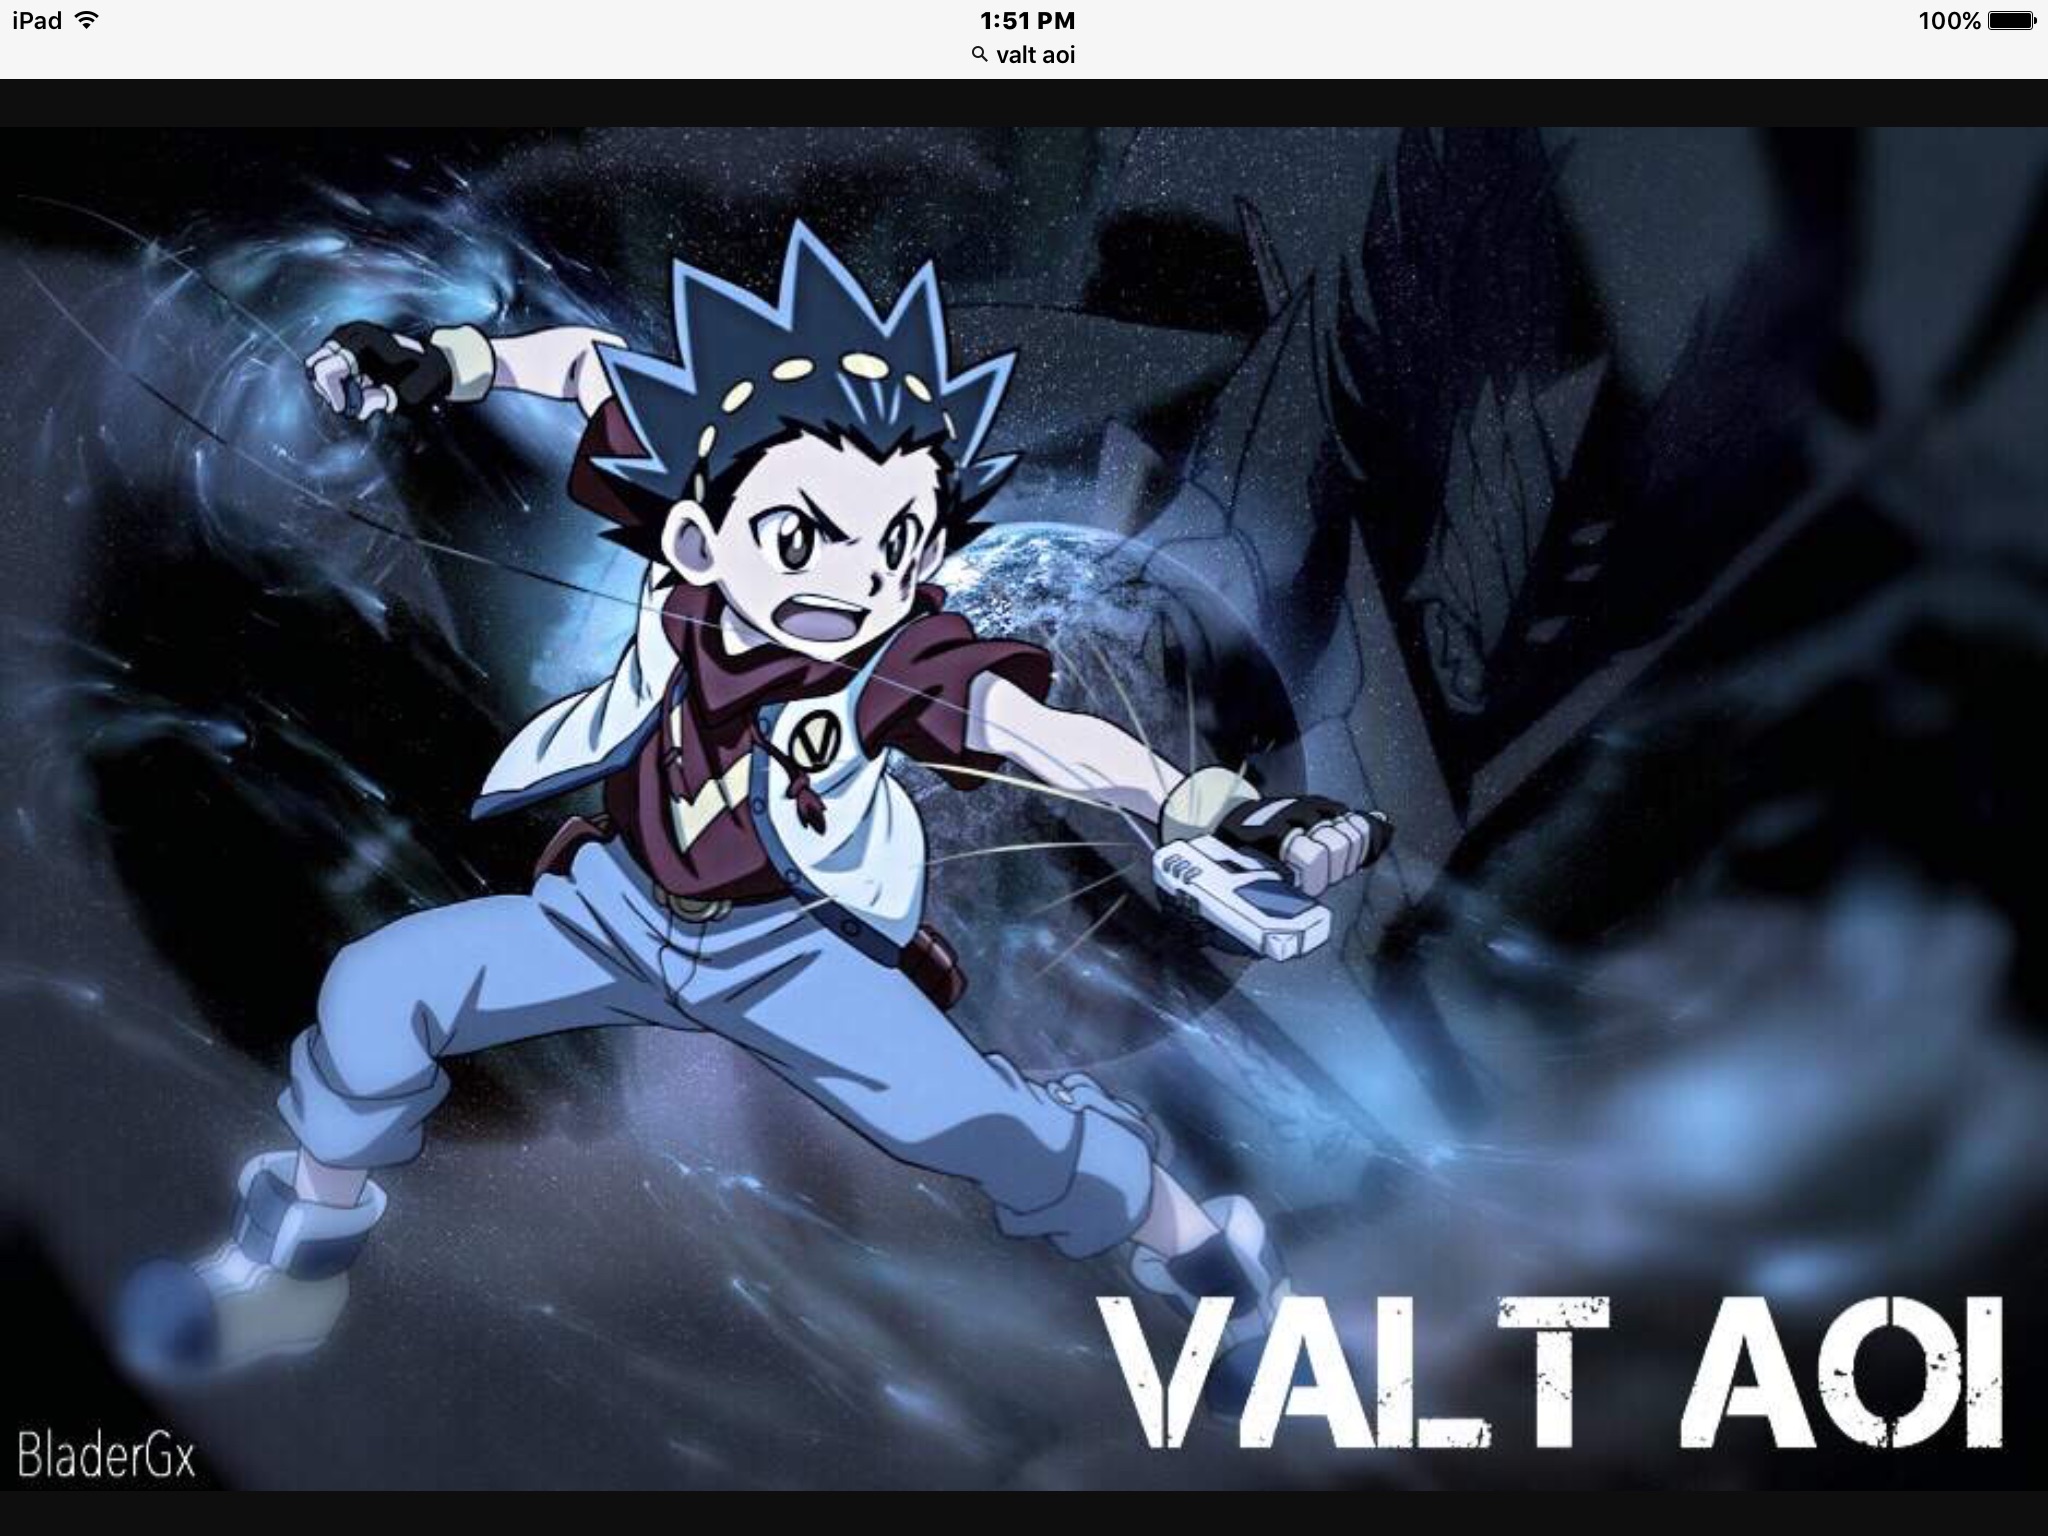 Valt Eloi's avatar.